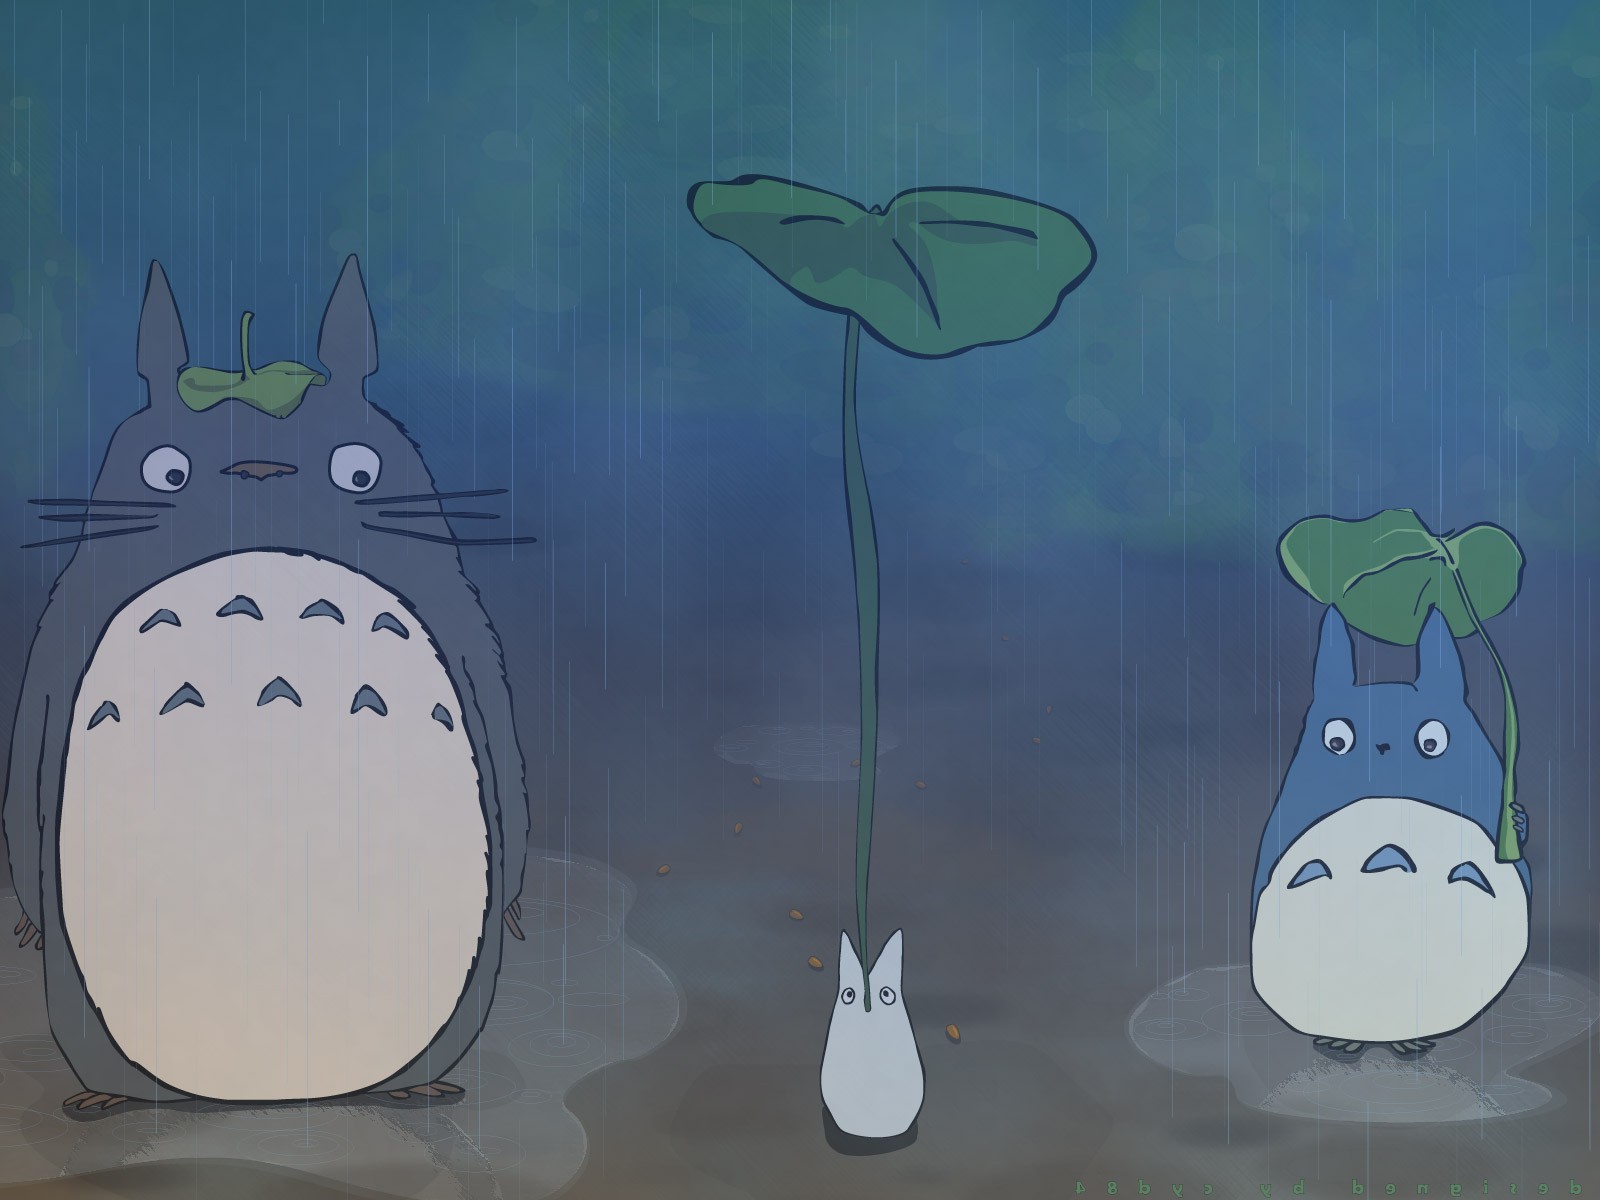 Totoro My Neighbor Totoro Studio Ghibli Wallpapers Hd Desktop And Mobile Backgrounds